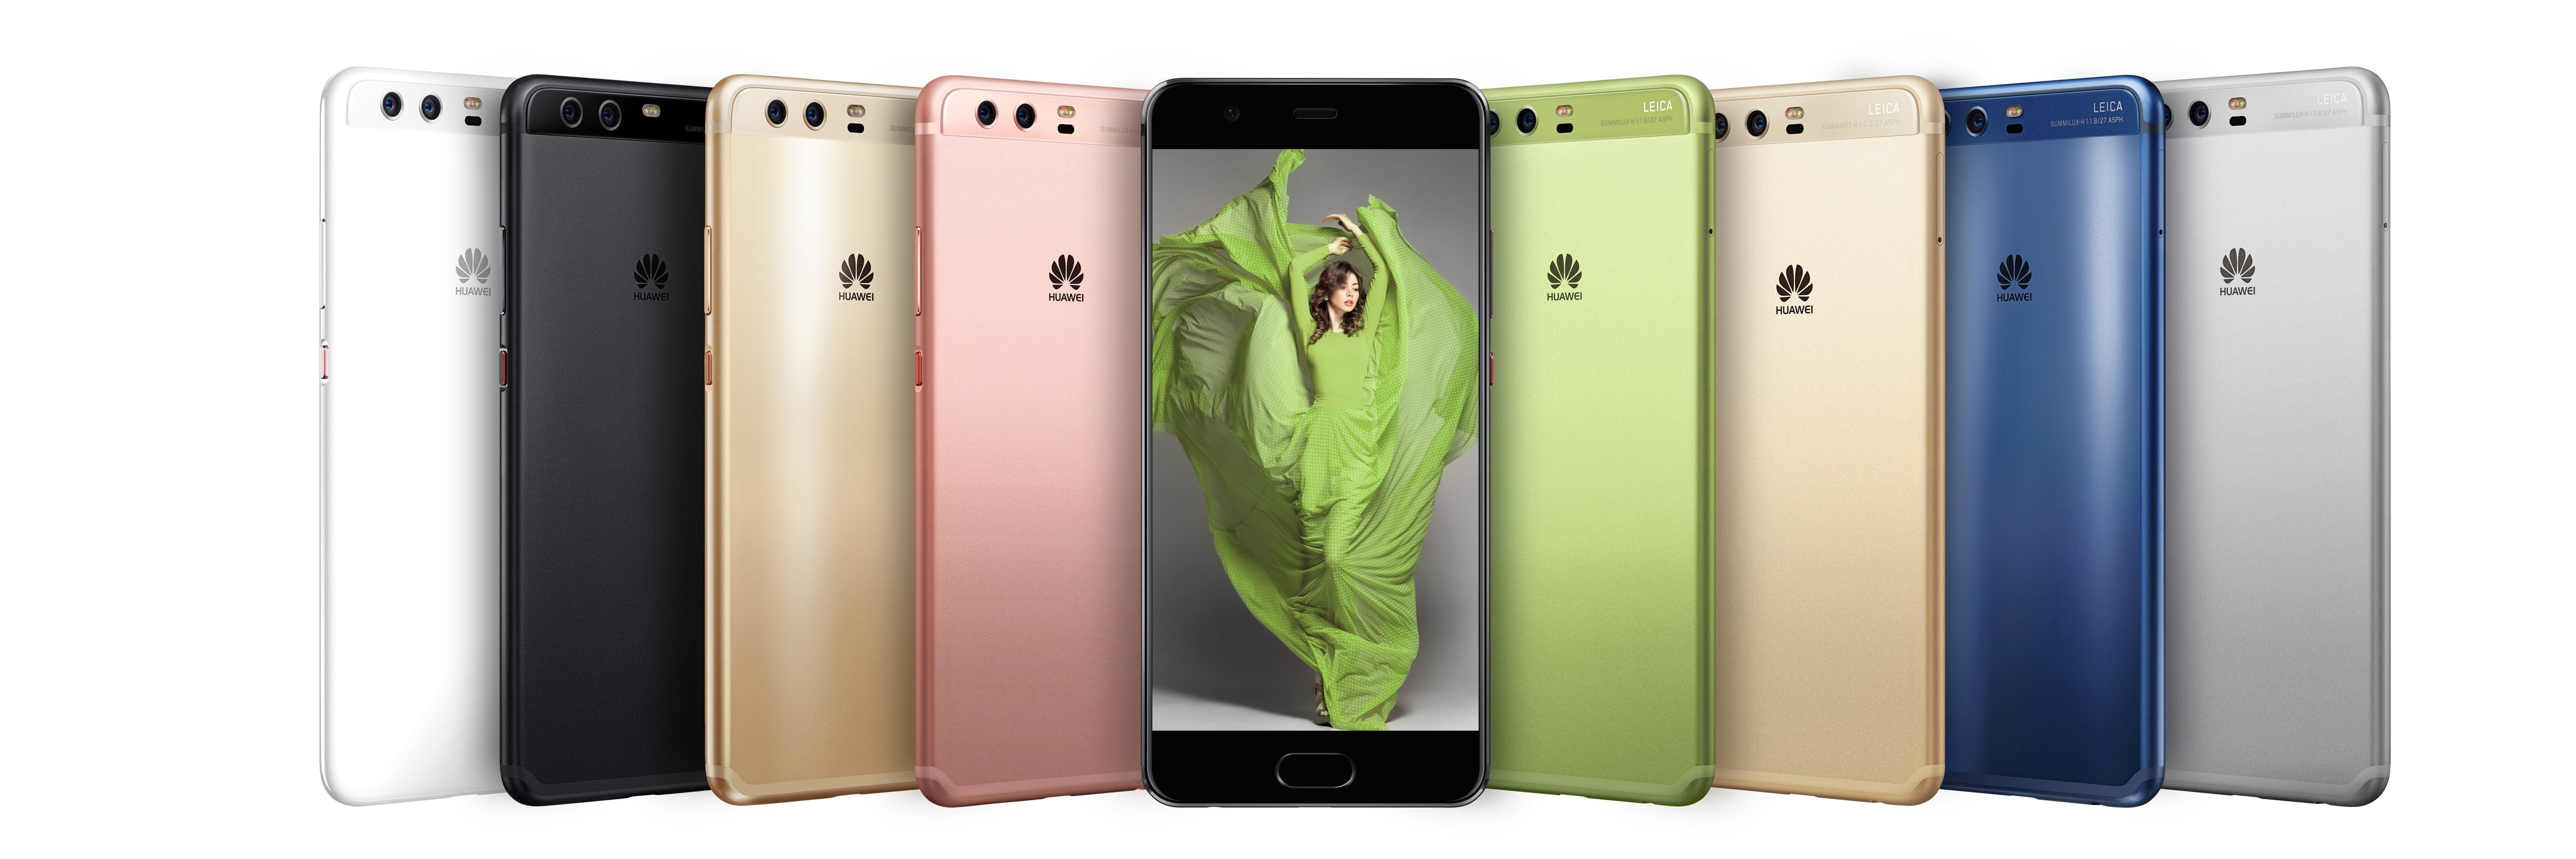 all colors Huawei P10 Lite smartphones